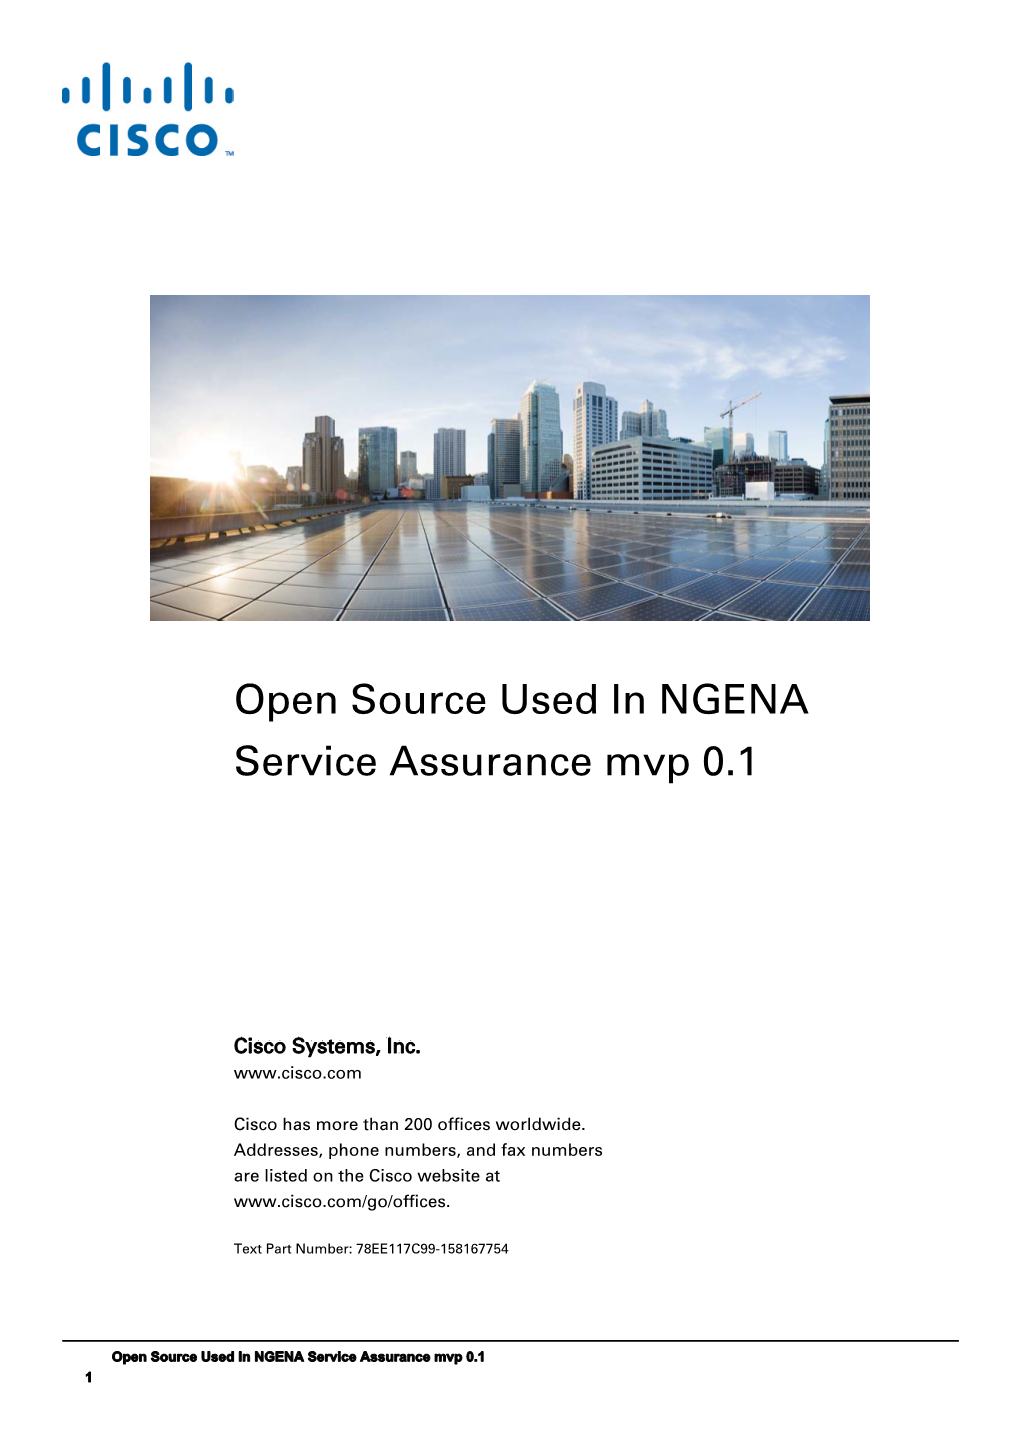 NGENA Service Assurance Mvp 0.1